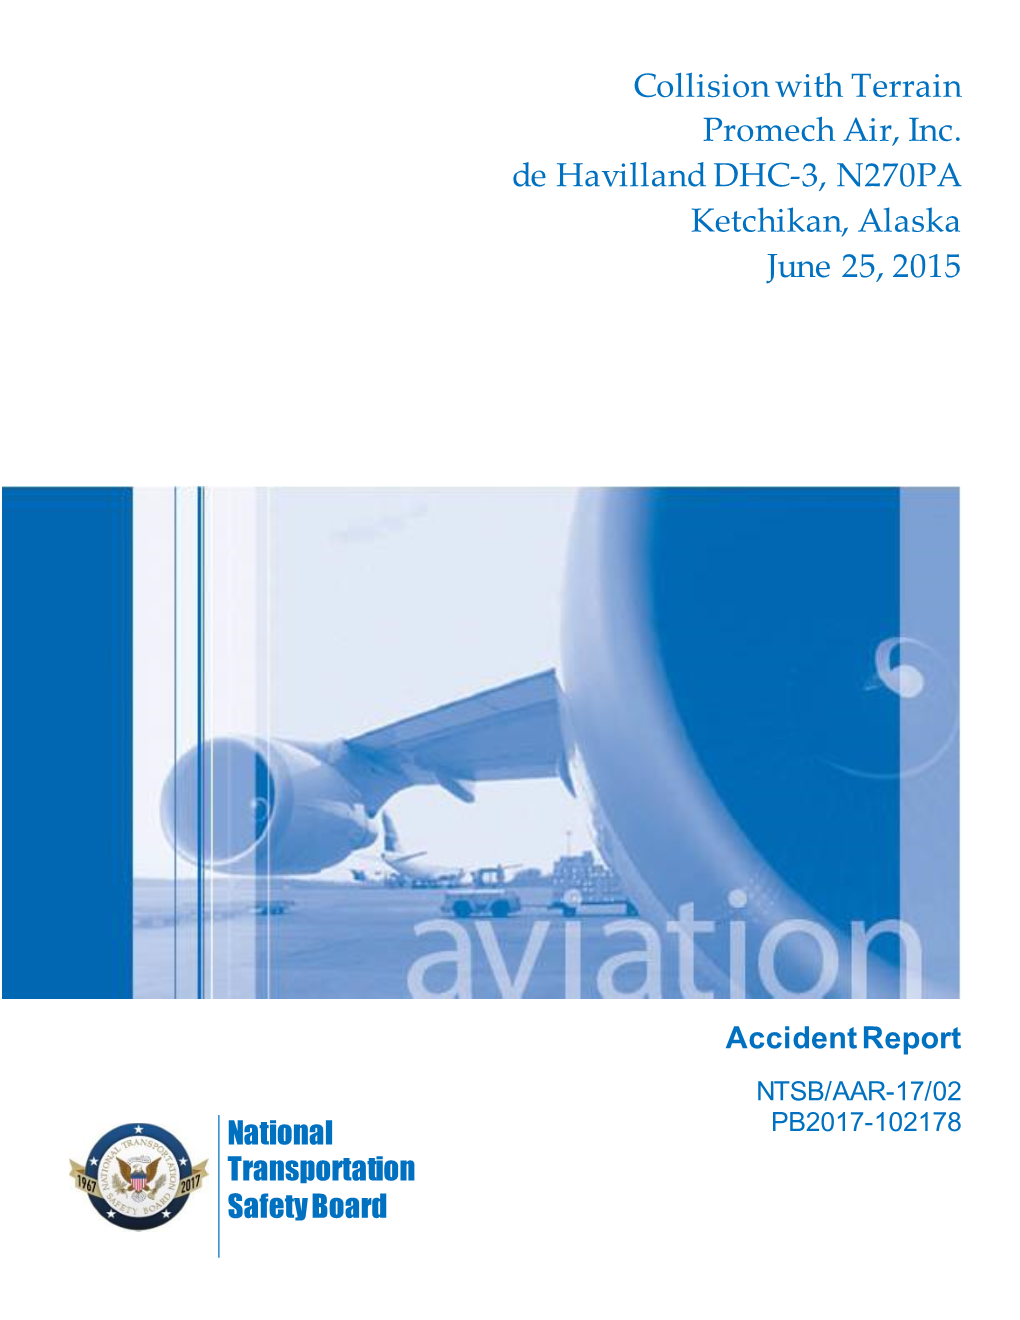 Collision with Terrain, Promech Air, Inc., De Havilland DHC-3, N270PA, Ketchikan, Alaska, June 25, 2015